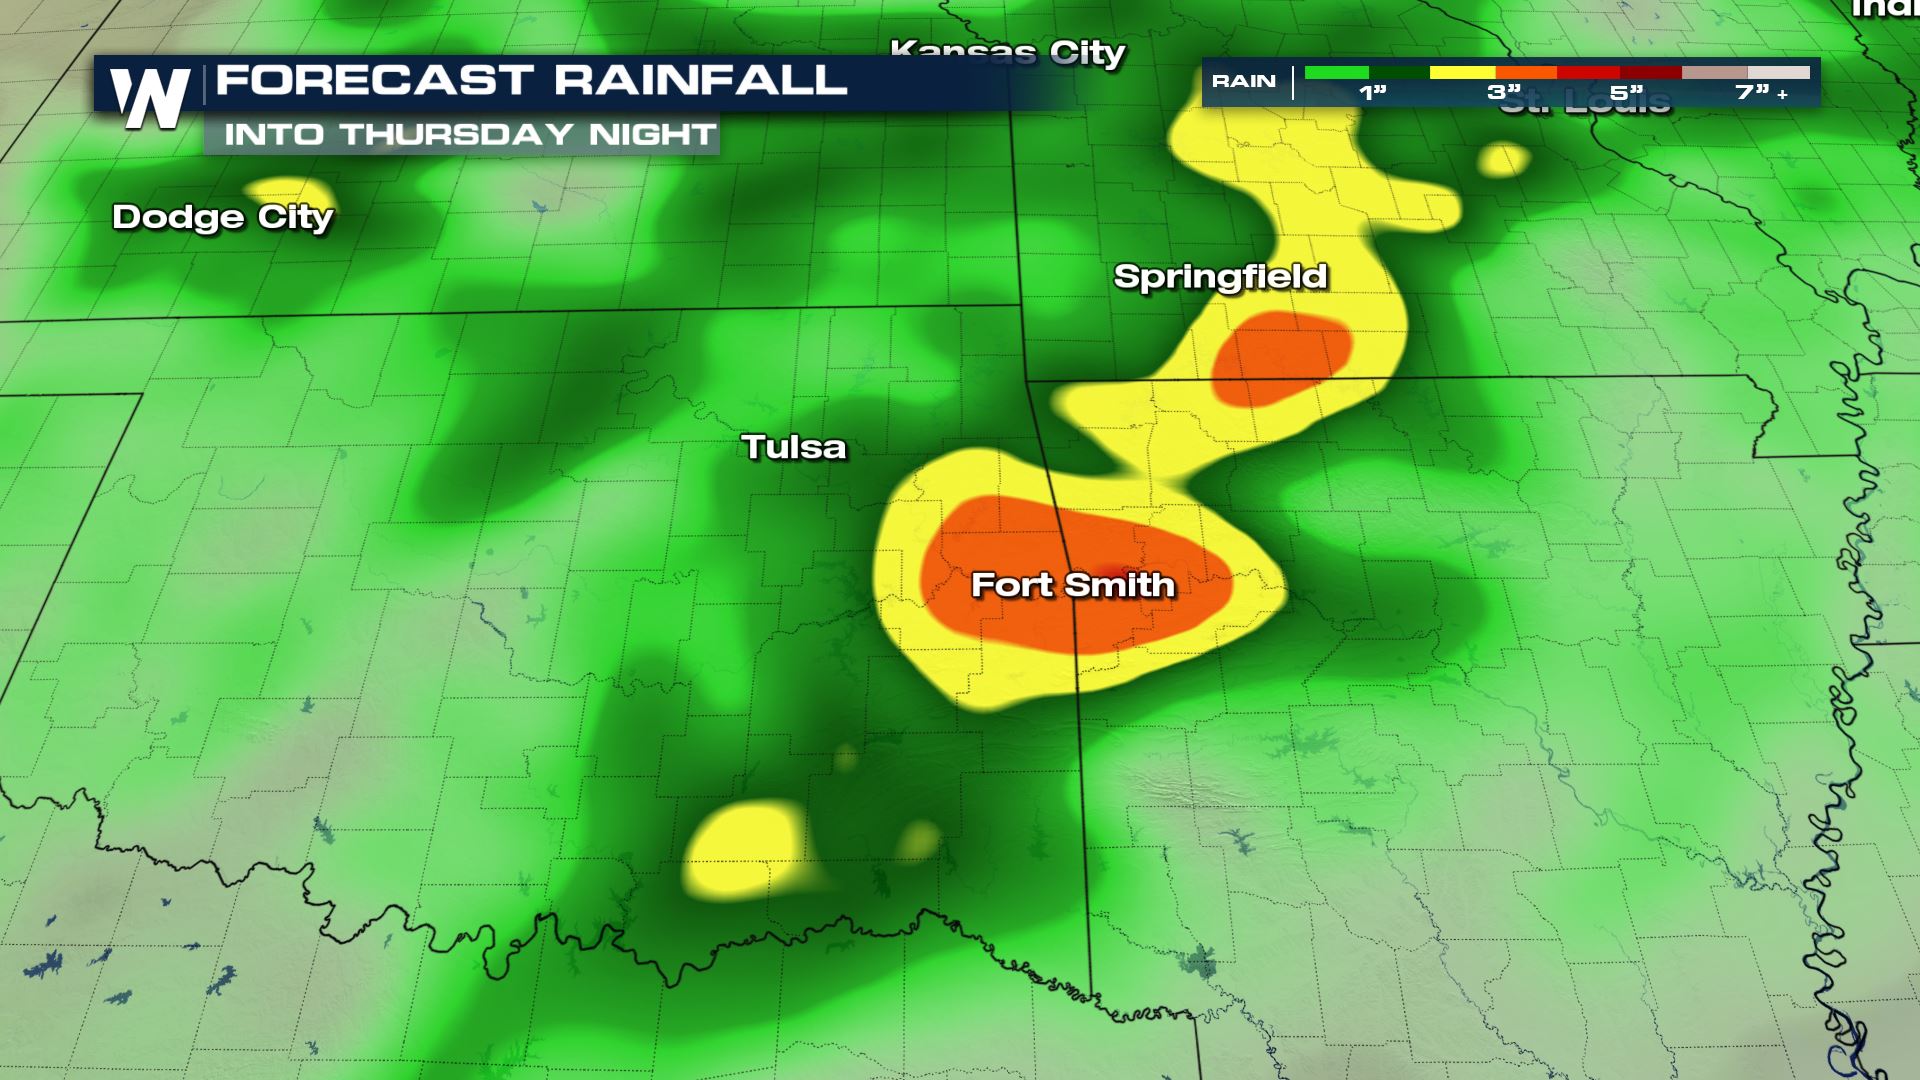 Flash Flooding Risk for Eastern Oklahoma and Western Arkansas Tuesday